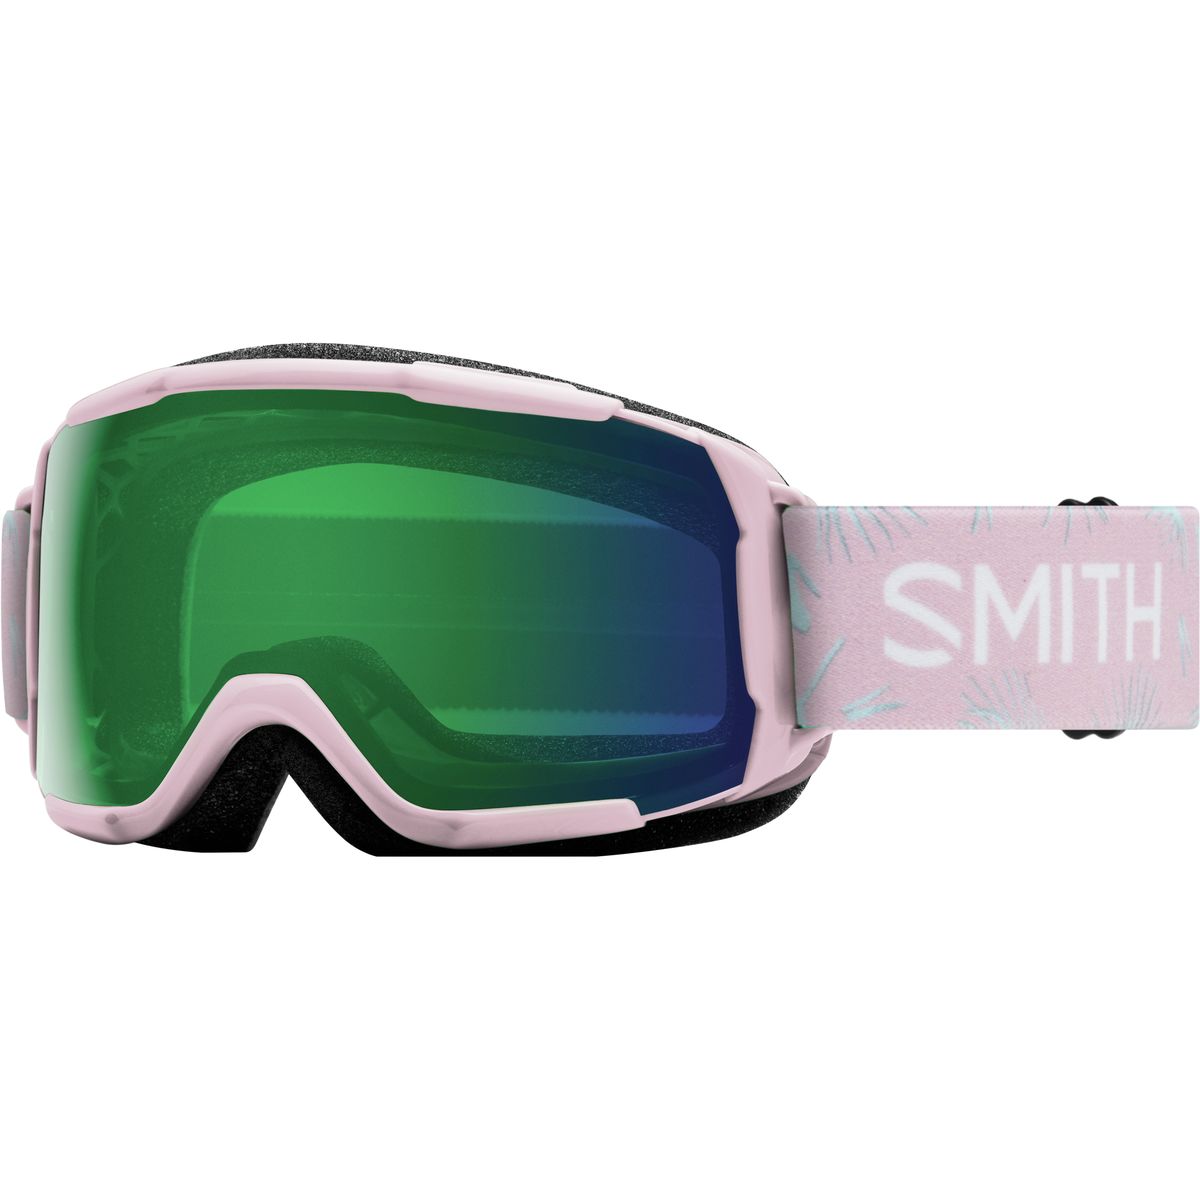 Smith Grom ChromaPop Goggles - Kids' Pink Paradise/Chromagrn Mir